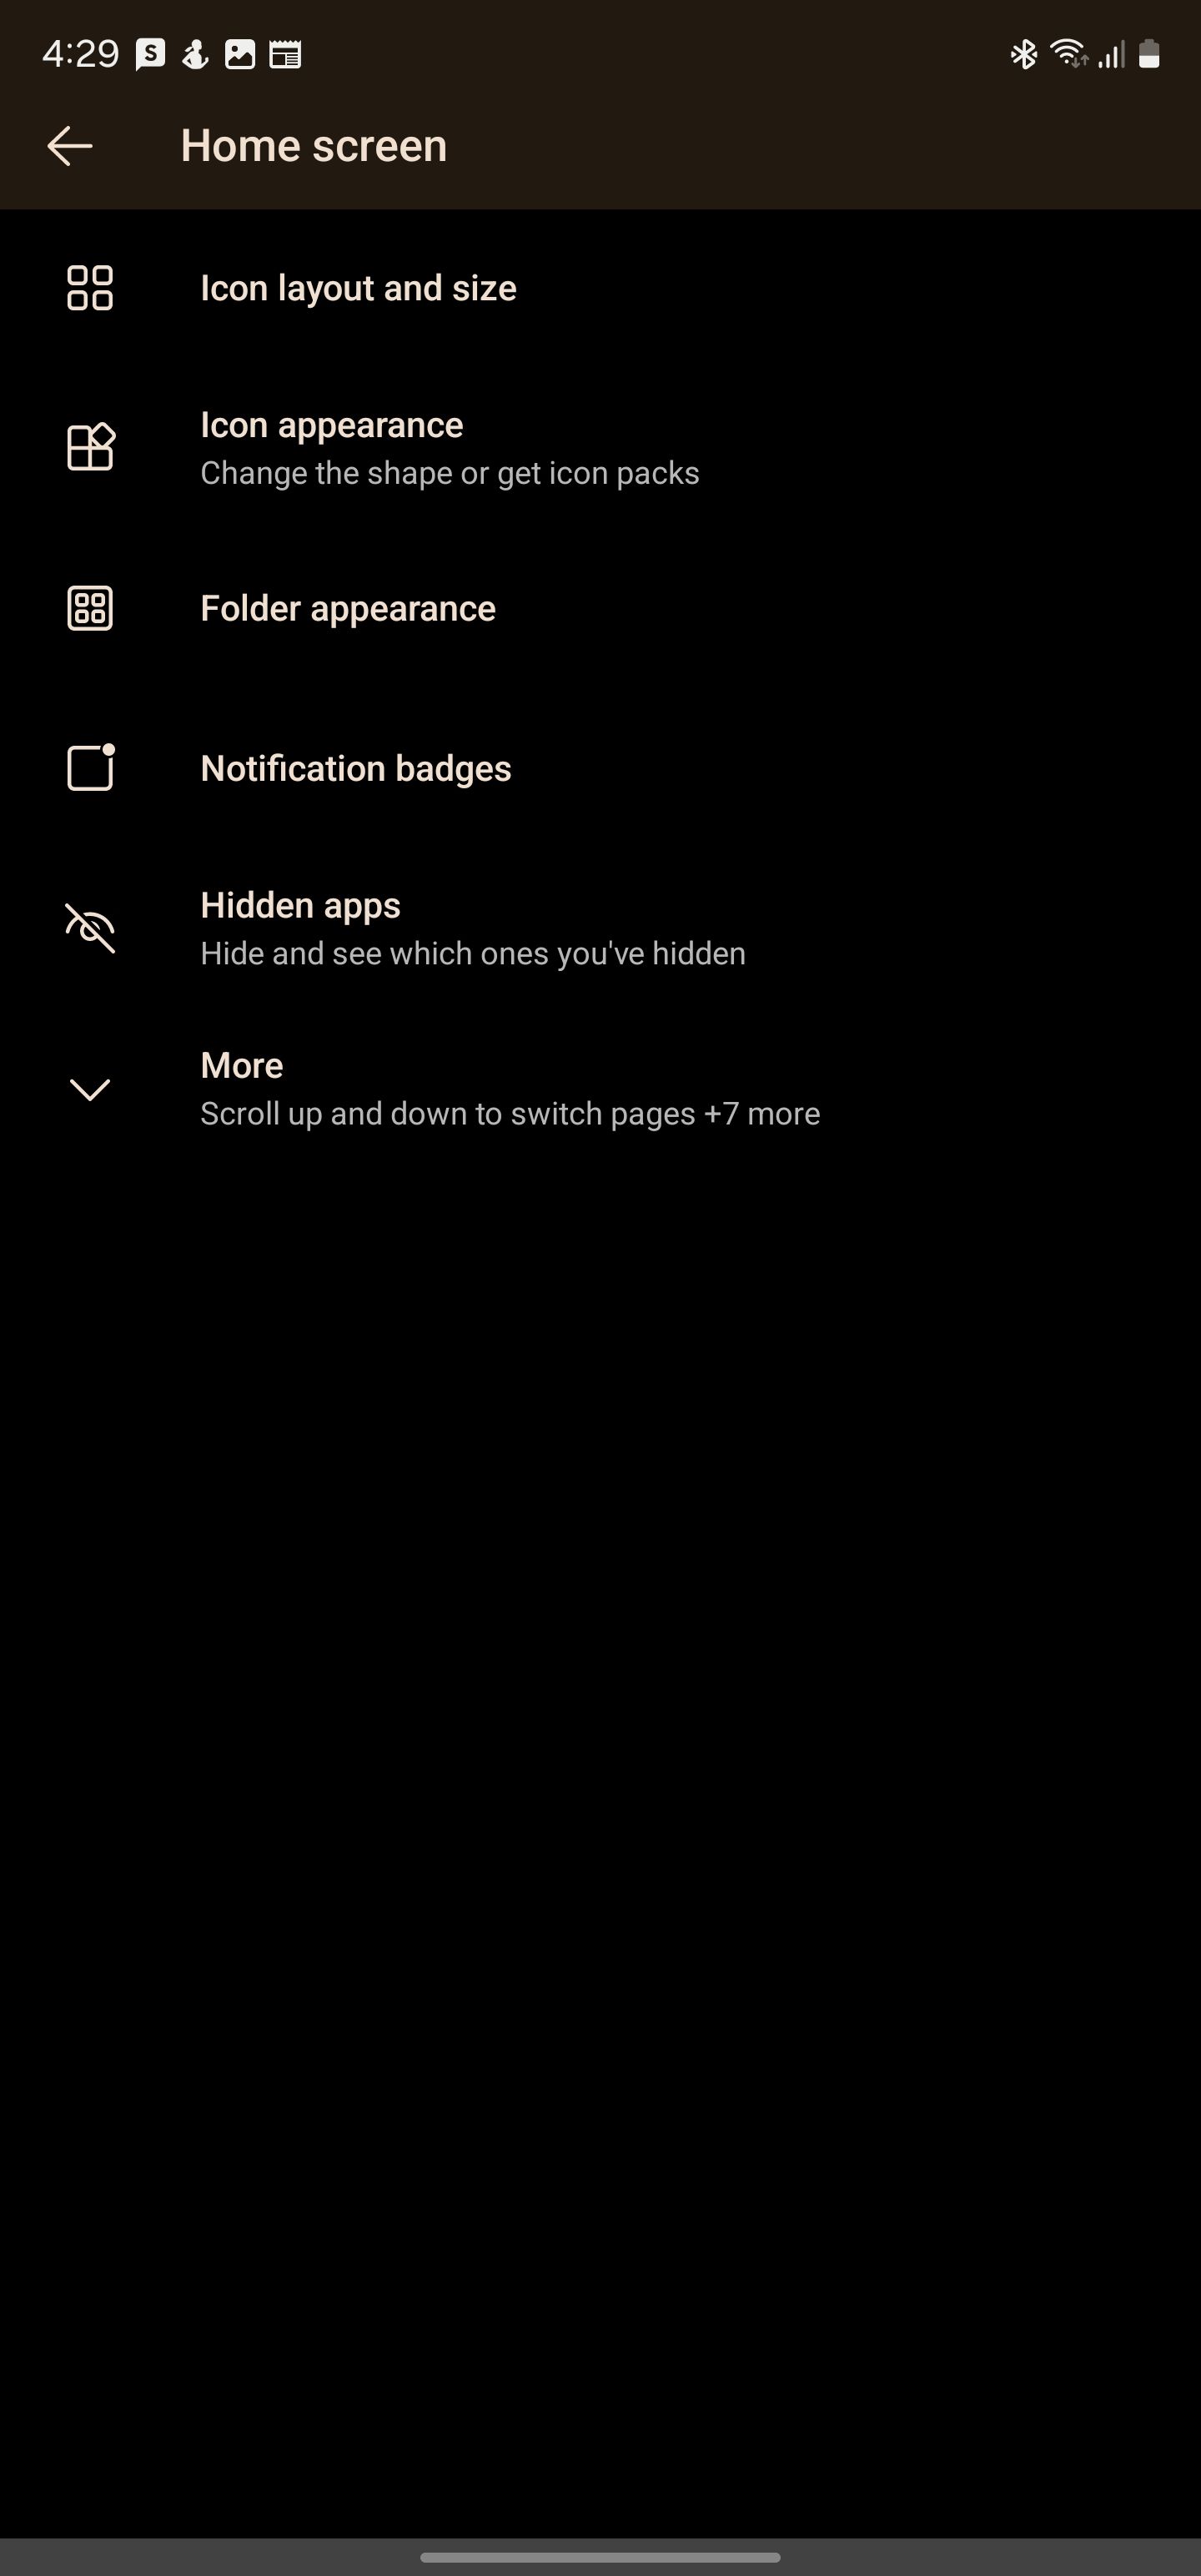 Home screen settings of Microsoft Launcher